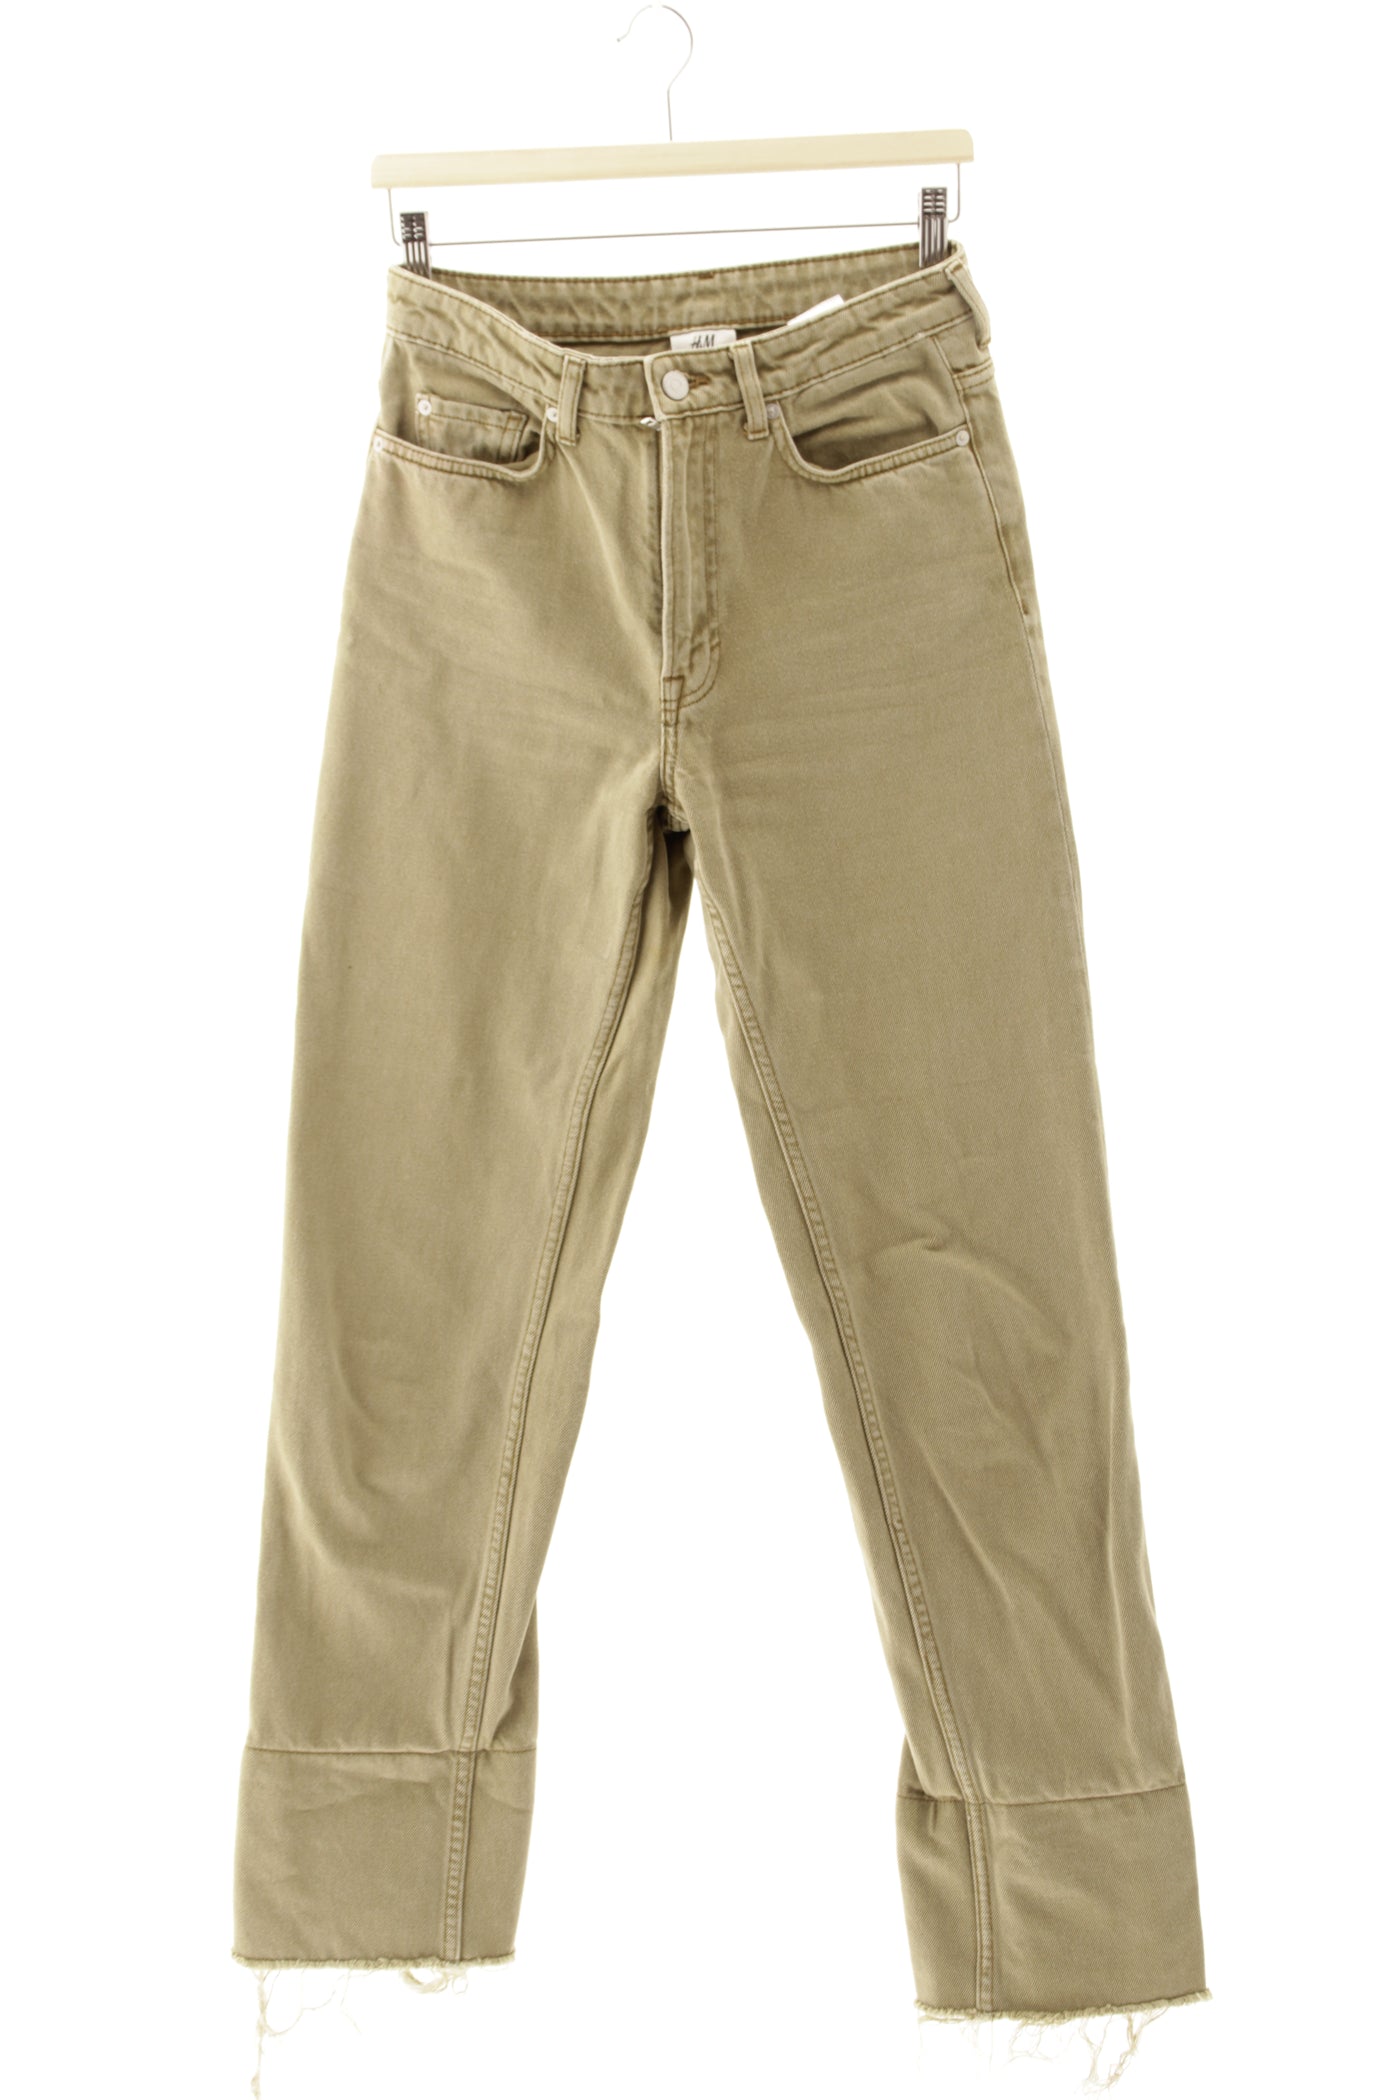 Pantalones denim beige straight fit